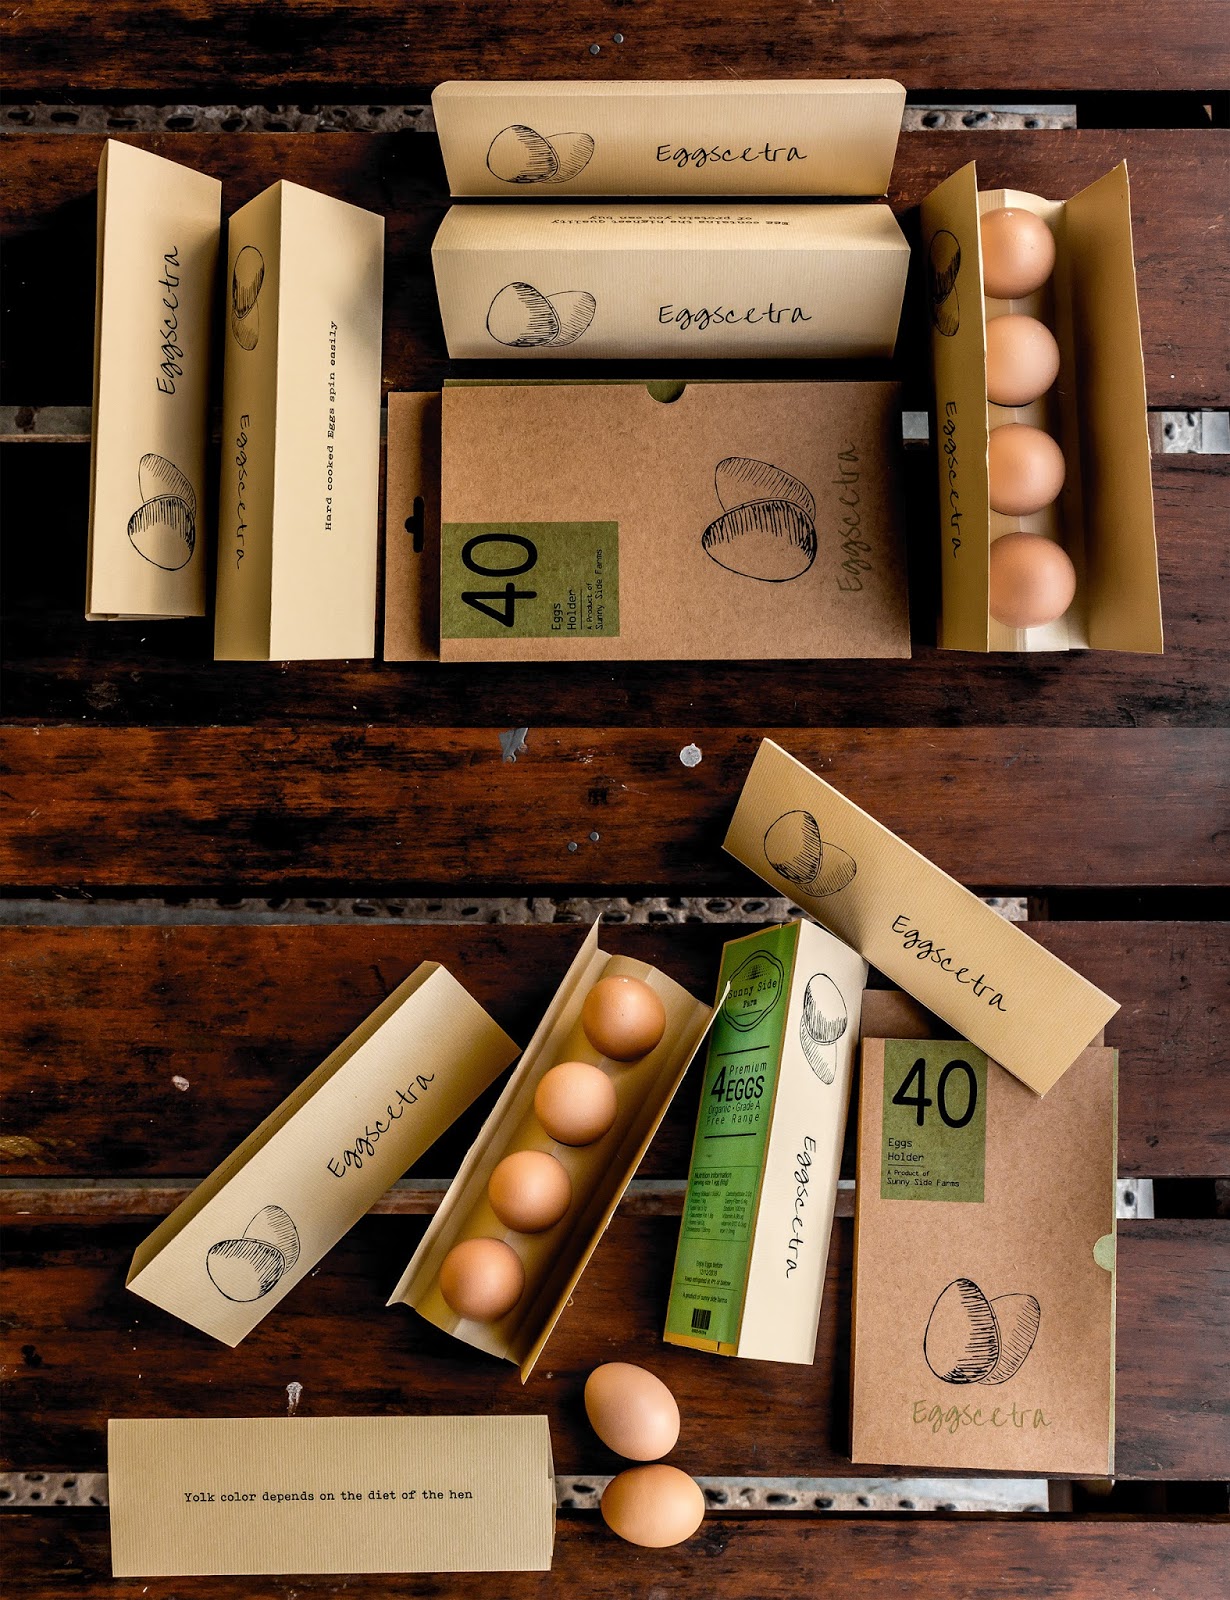 Eggscetra鸡蛋盒包装设计